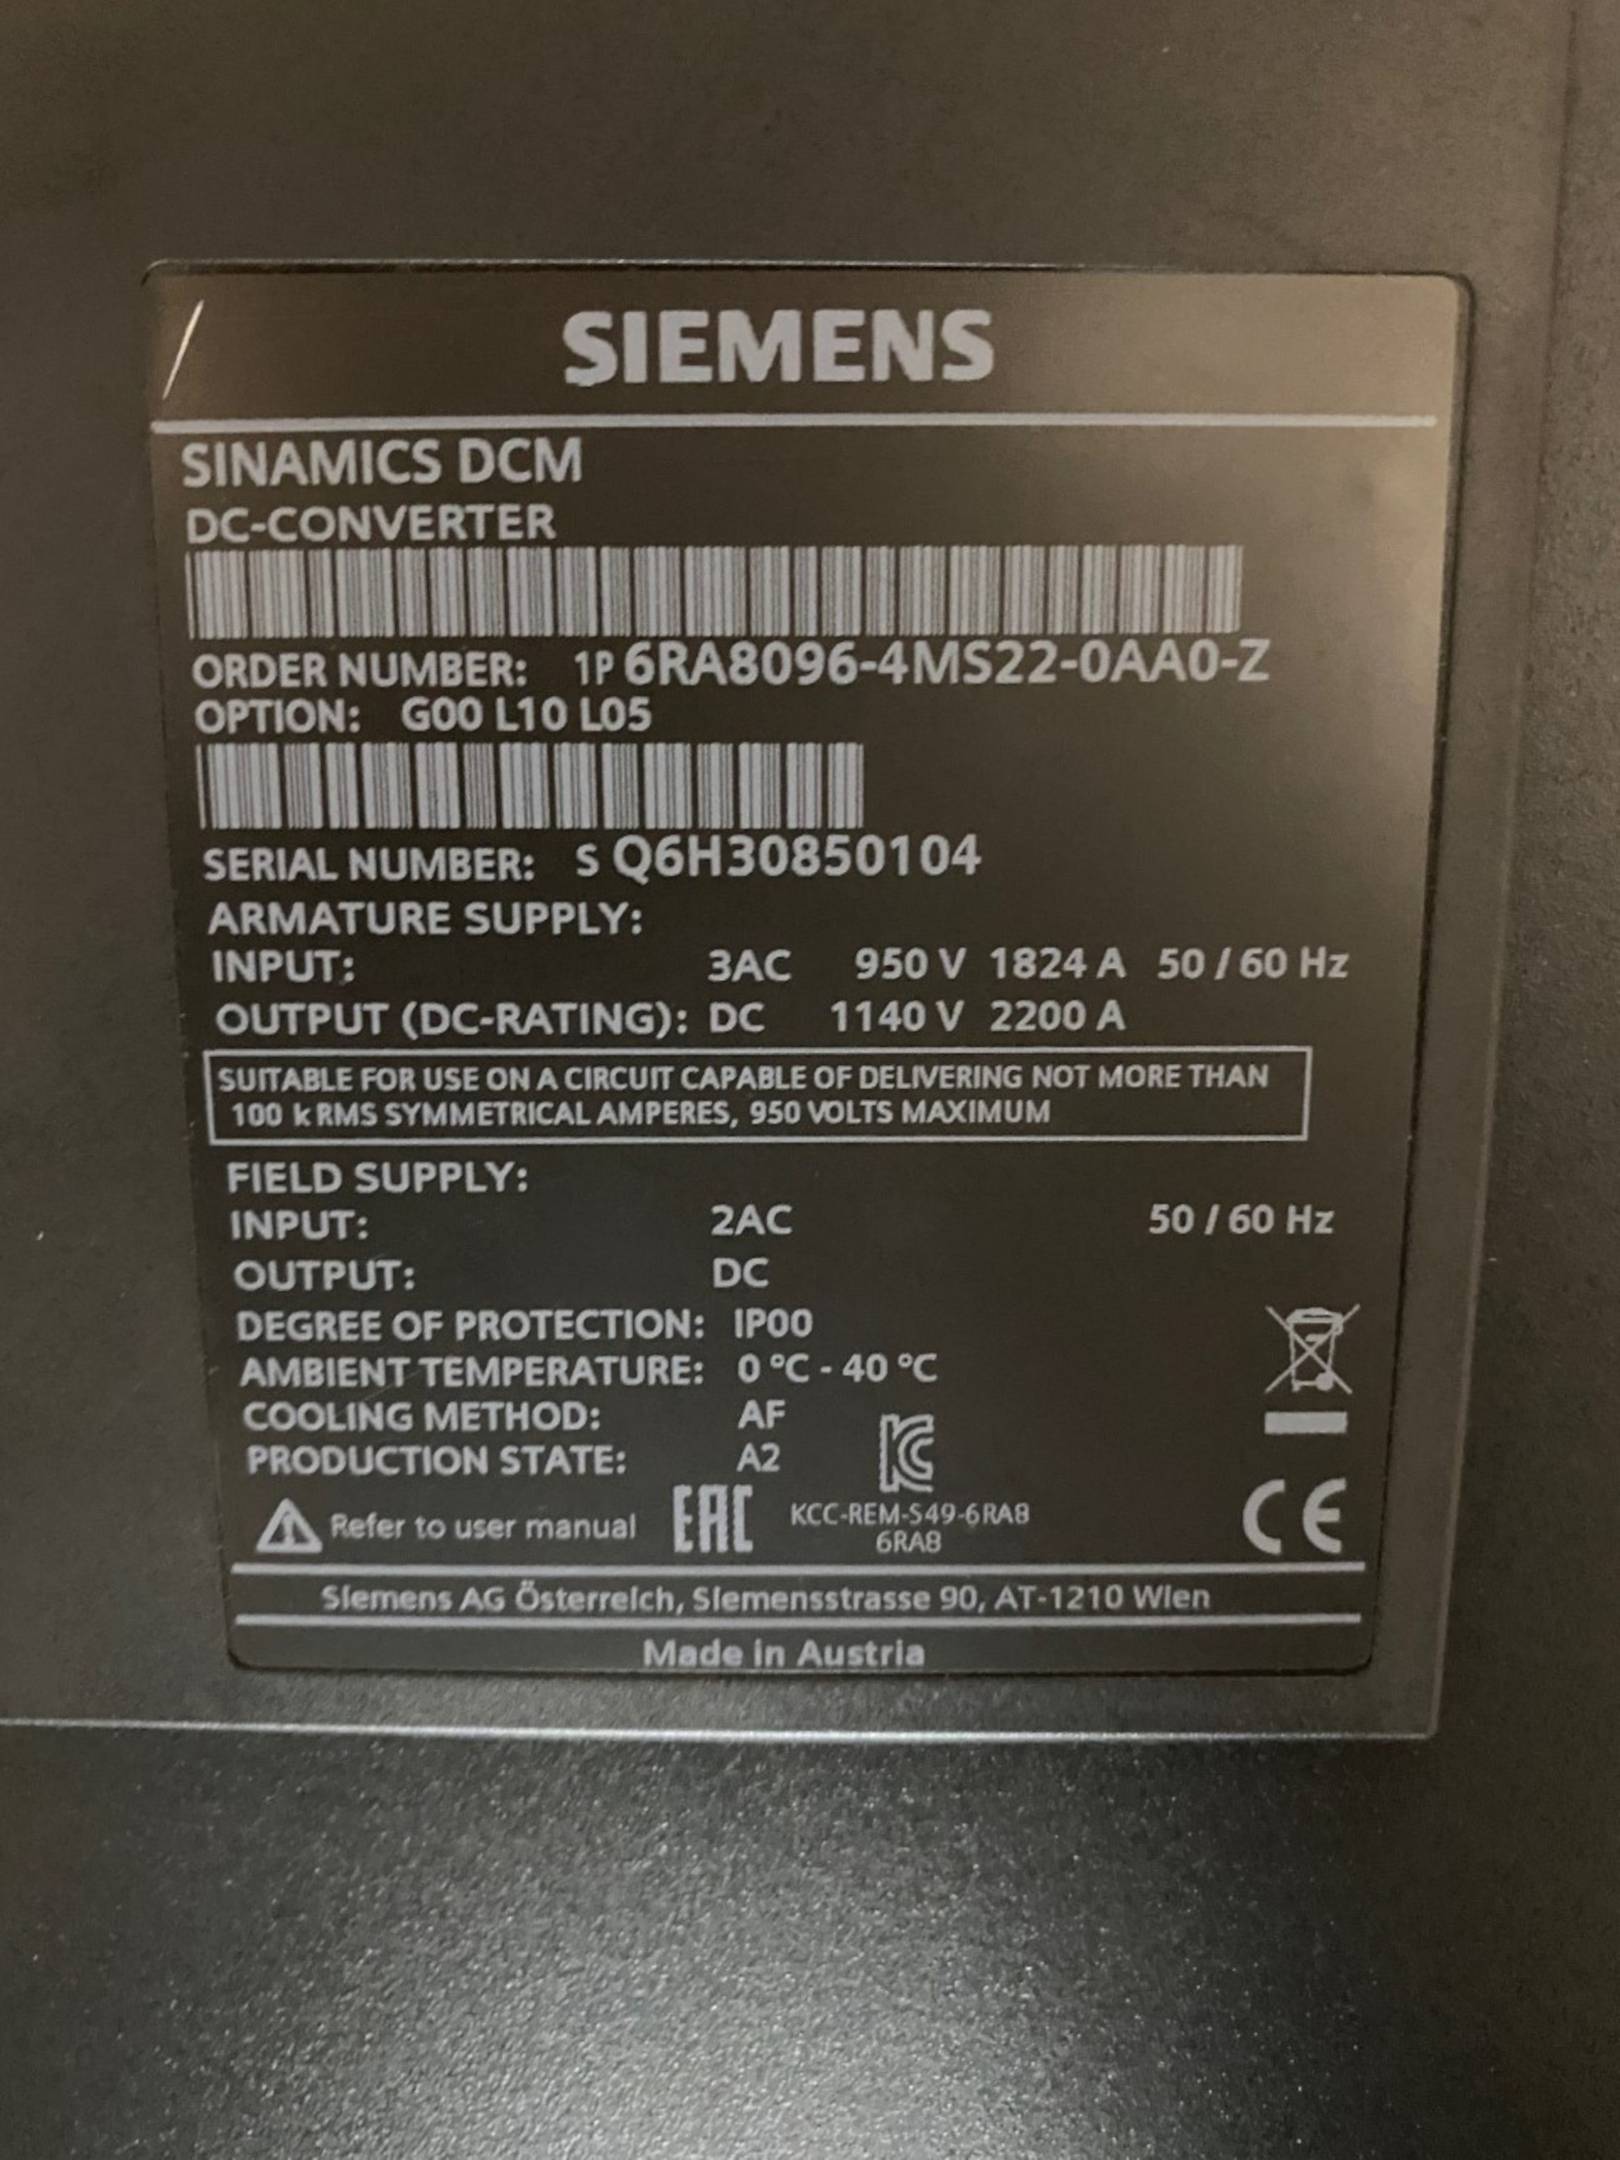 Siemens sinamics DCM DC-Converter 6RA8096-4MS22-0AA0-Z